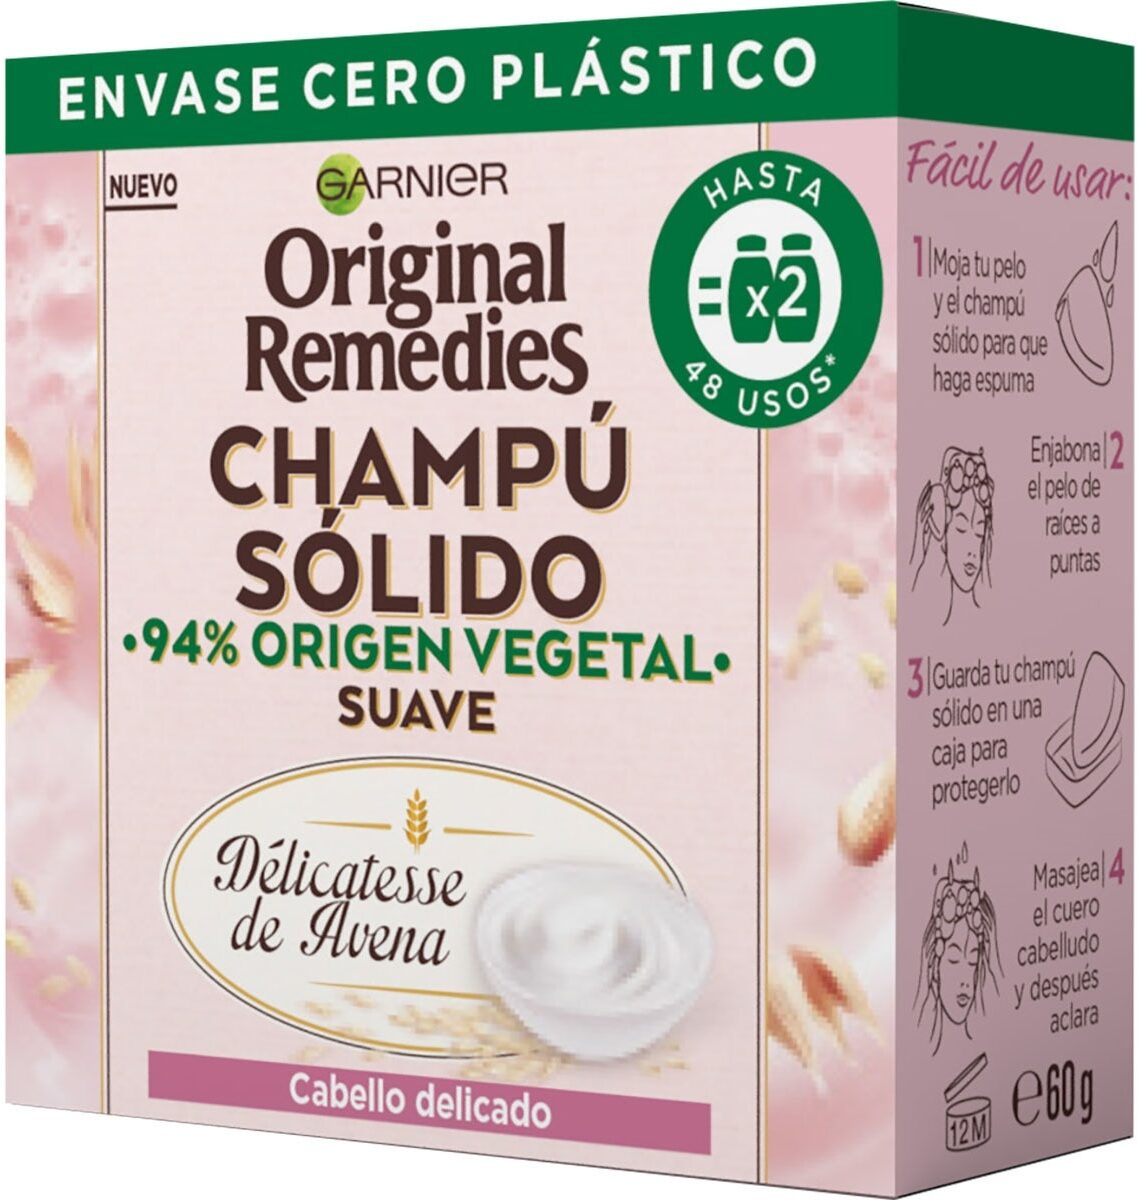 Original remedies champú solido avena - 製品 - en